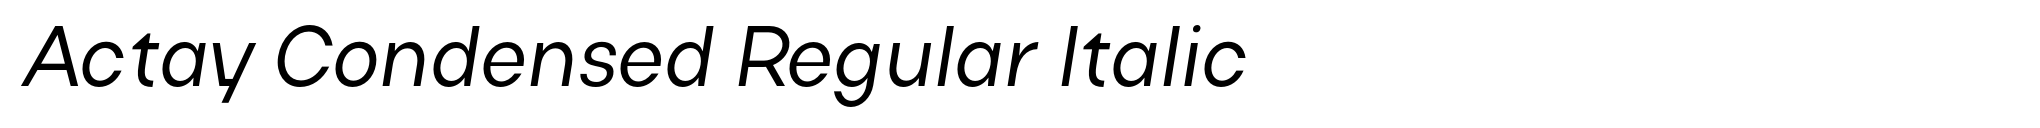 Actay Condensed Regular Italic image